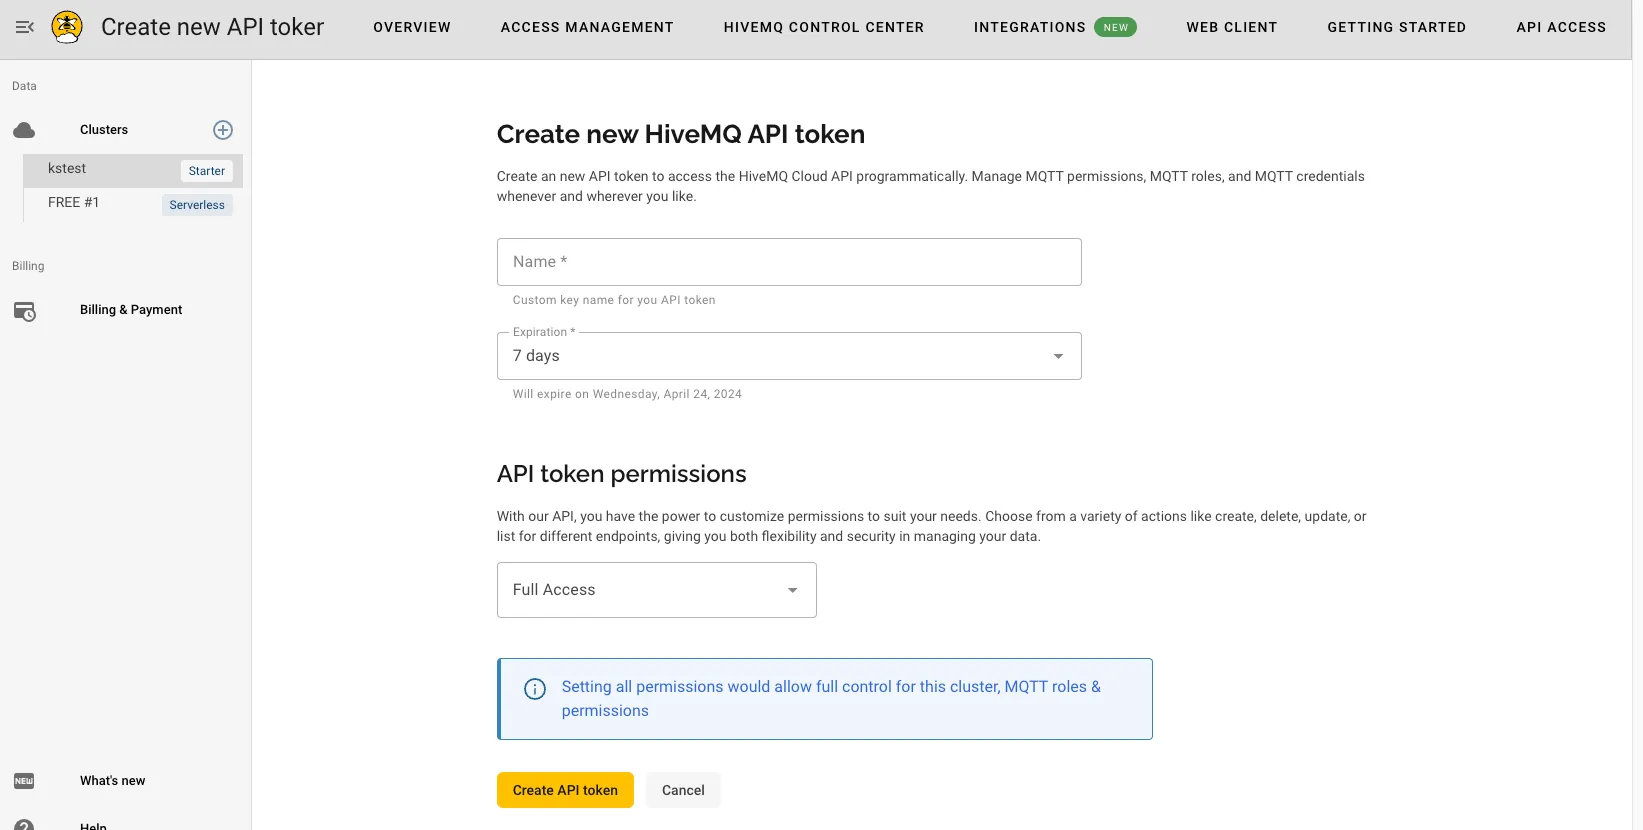 Create a new HiveMQ API token